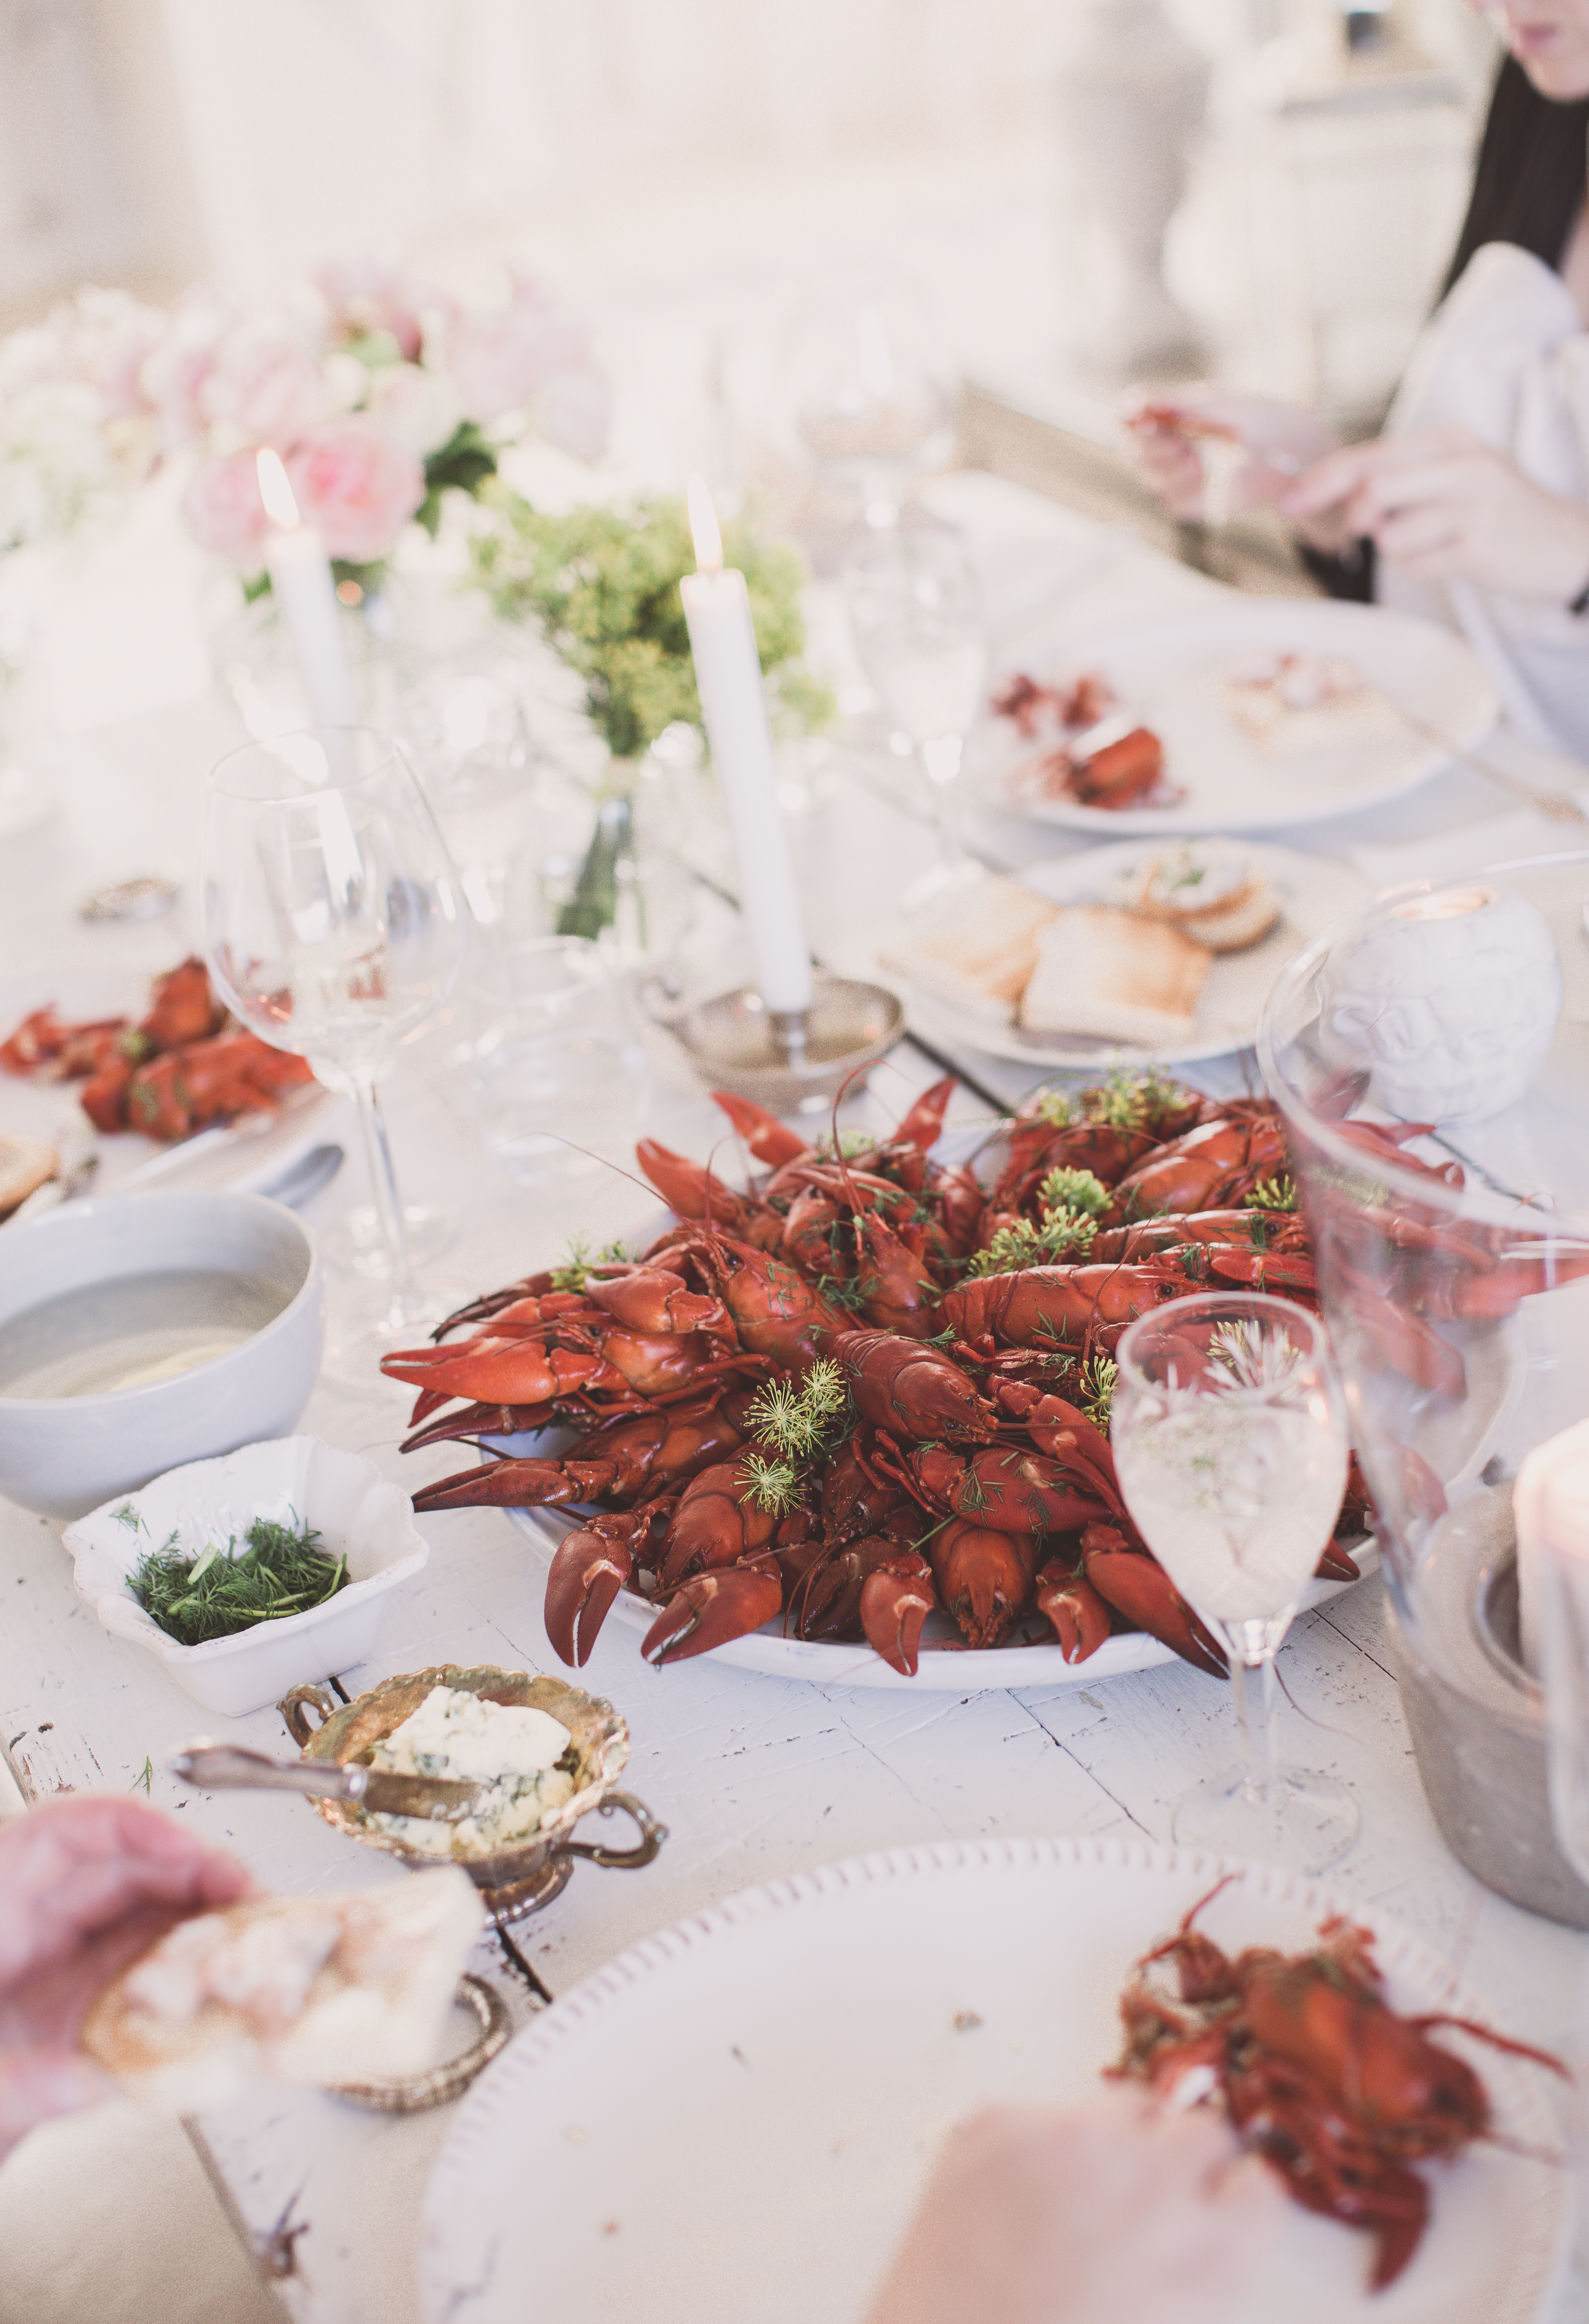 Ladies seasonal crayfish party